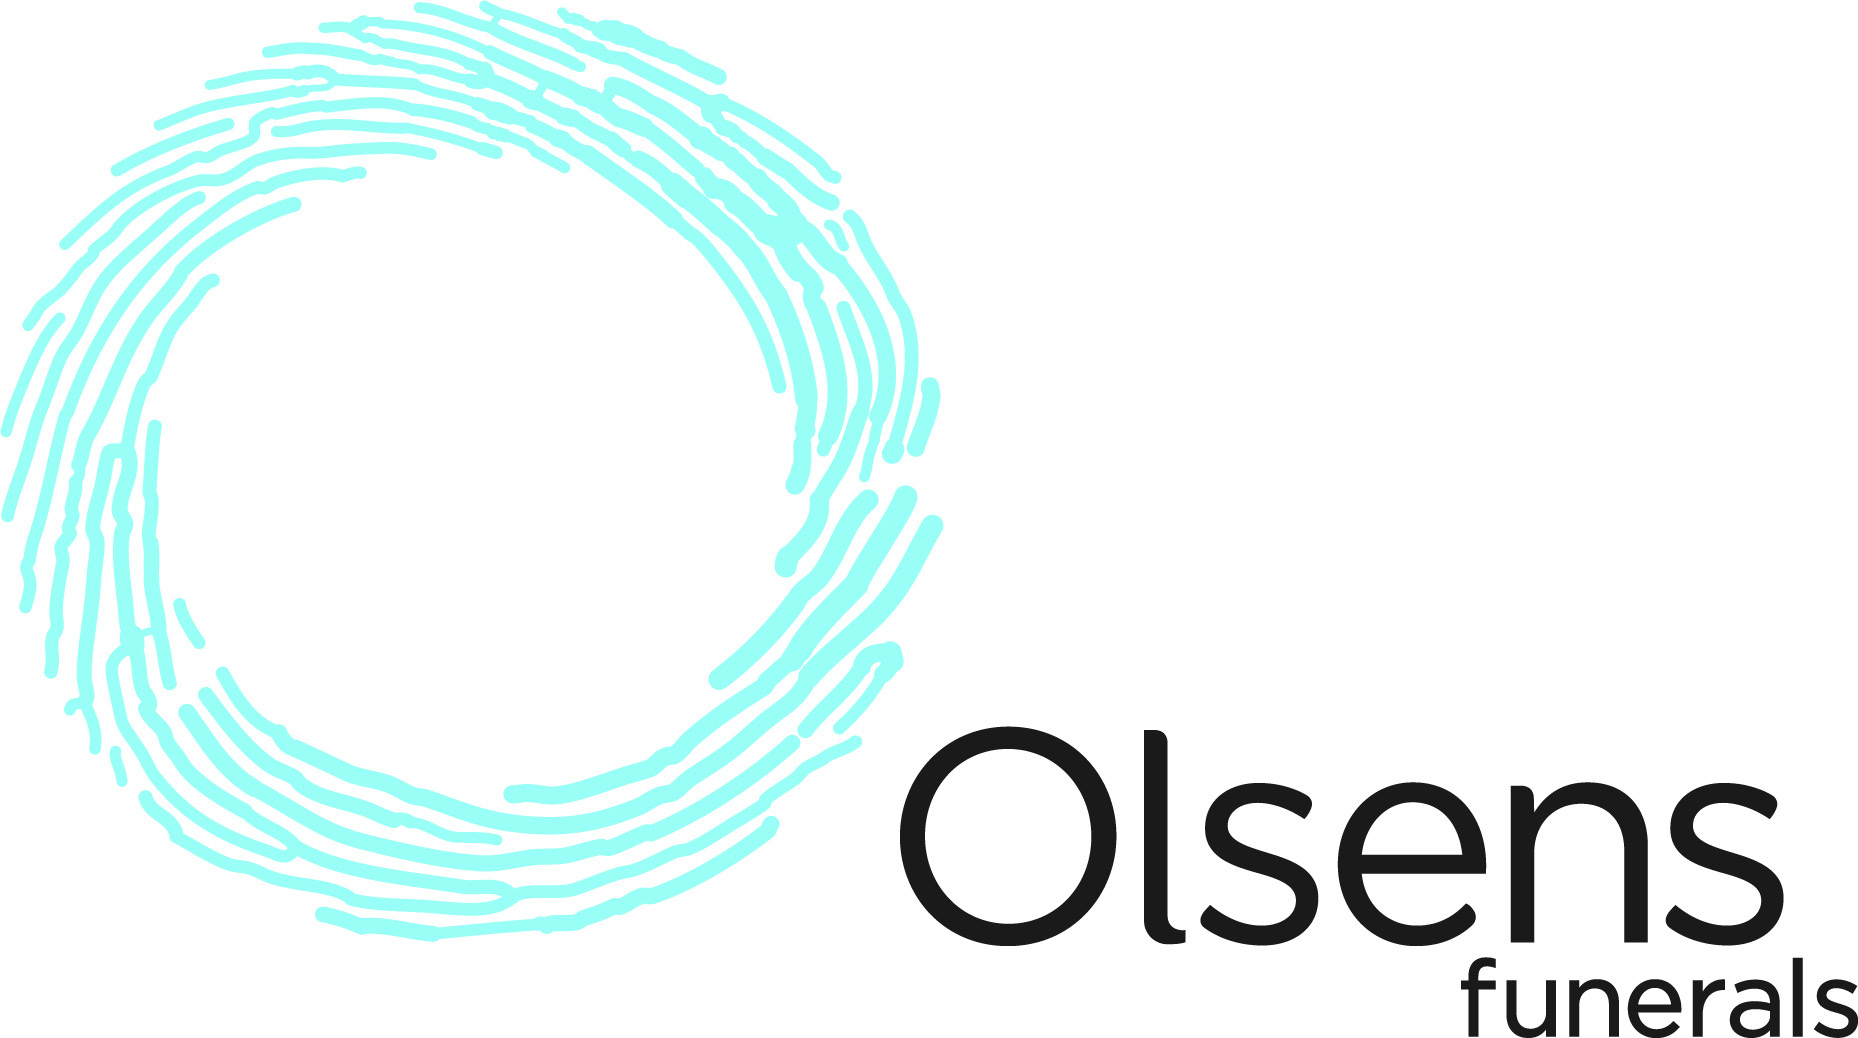 Olsens Funerals logo in colour.